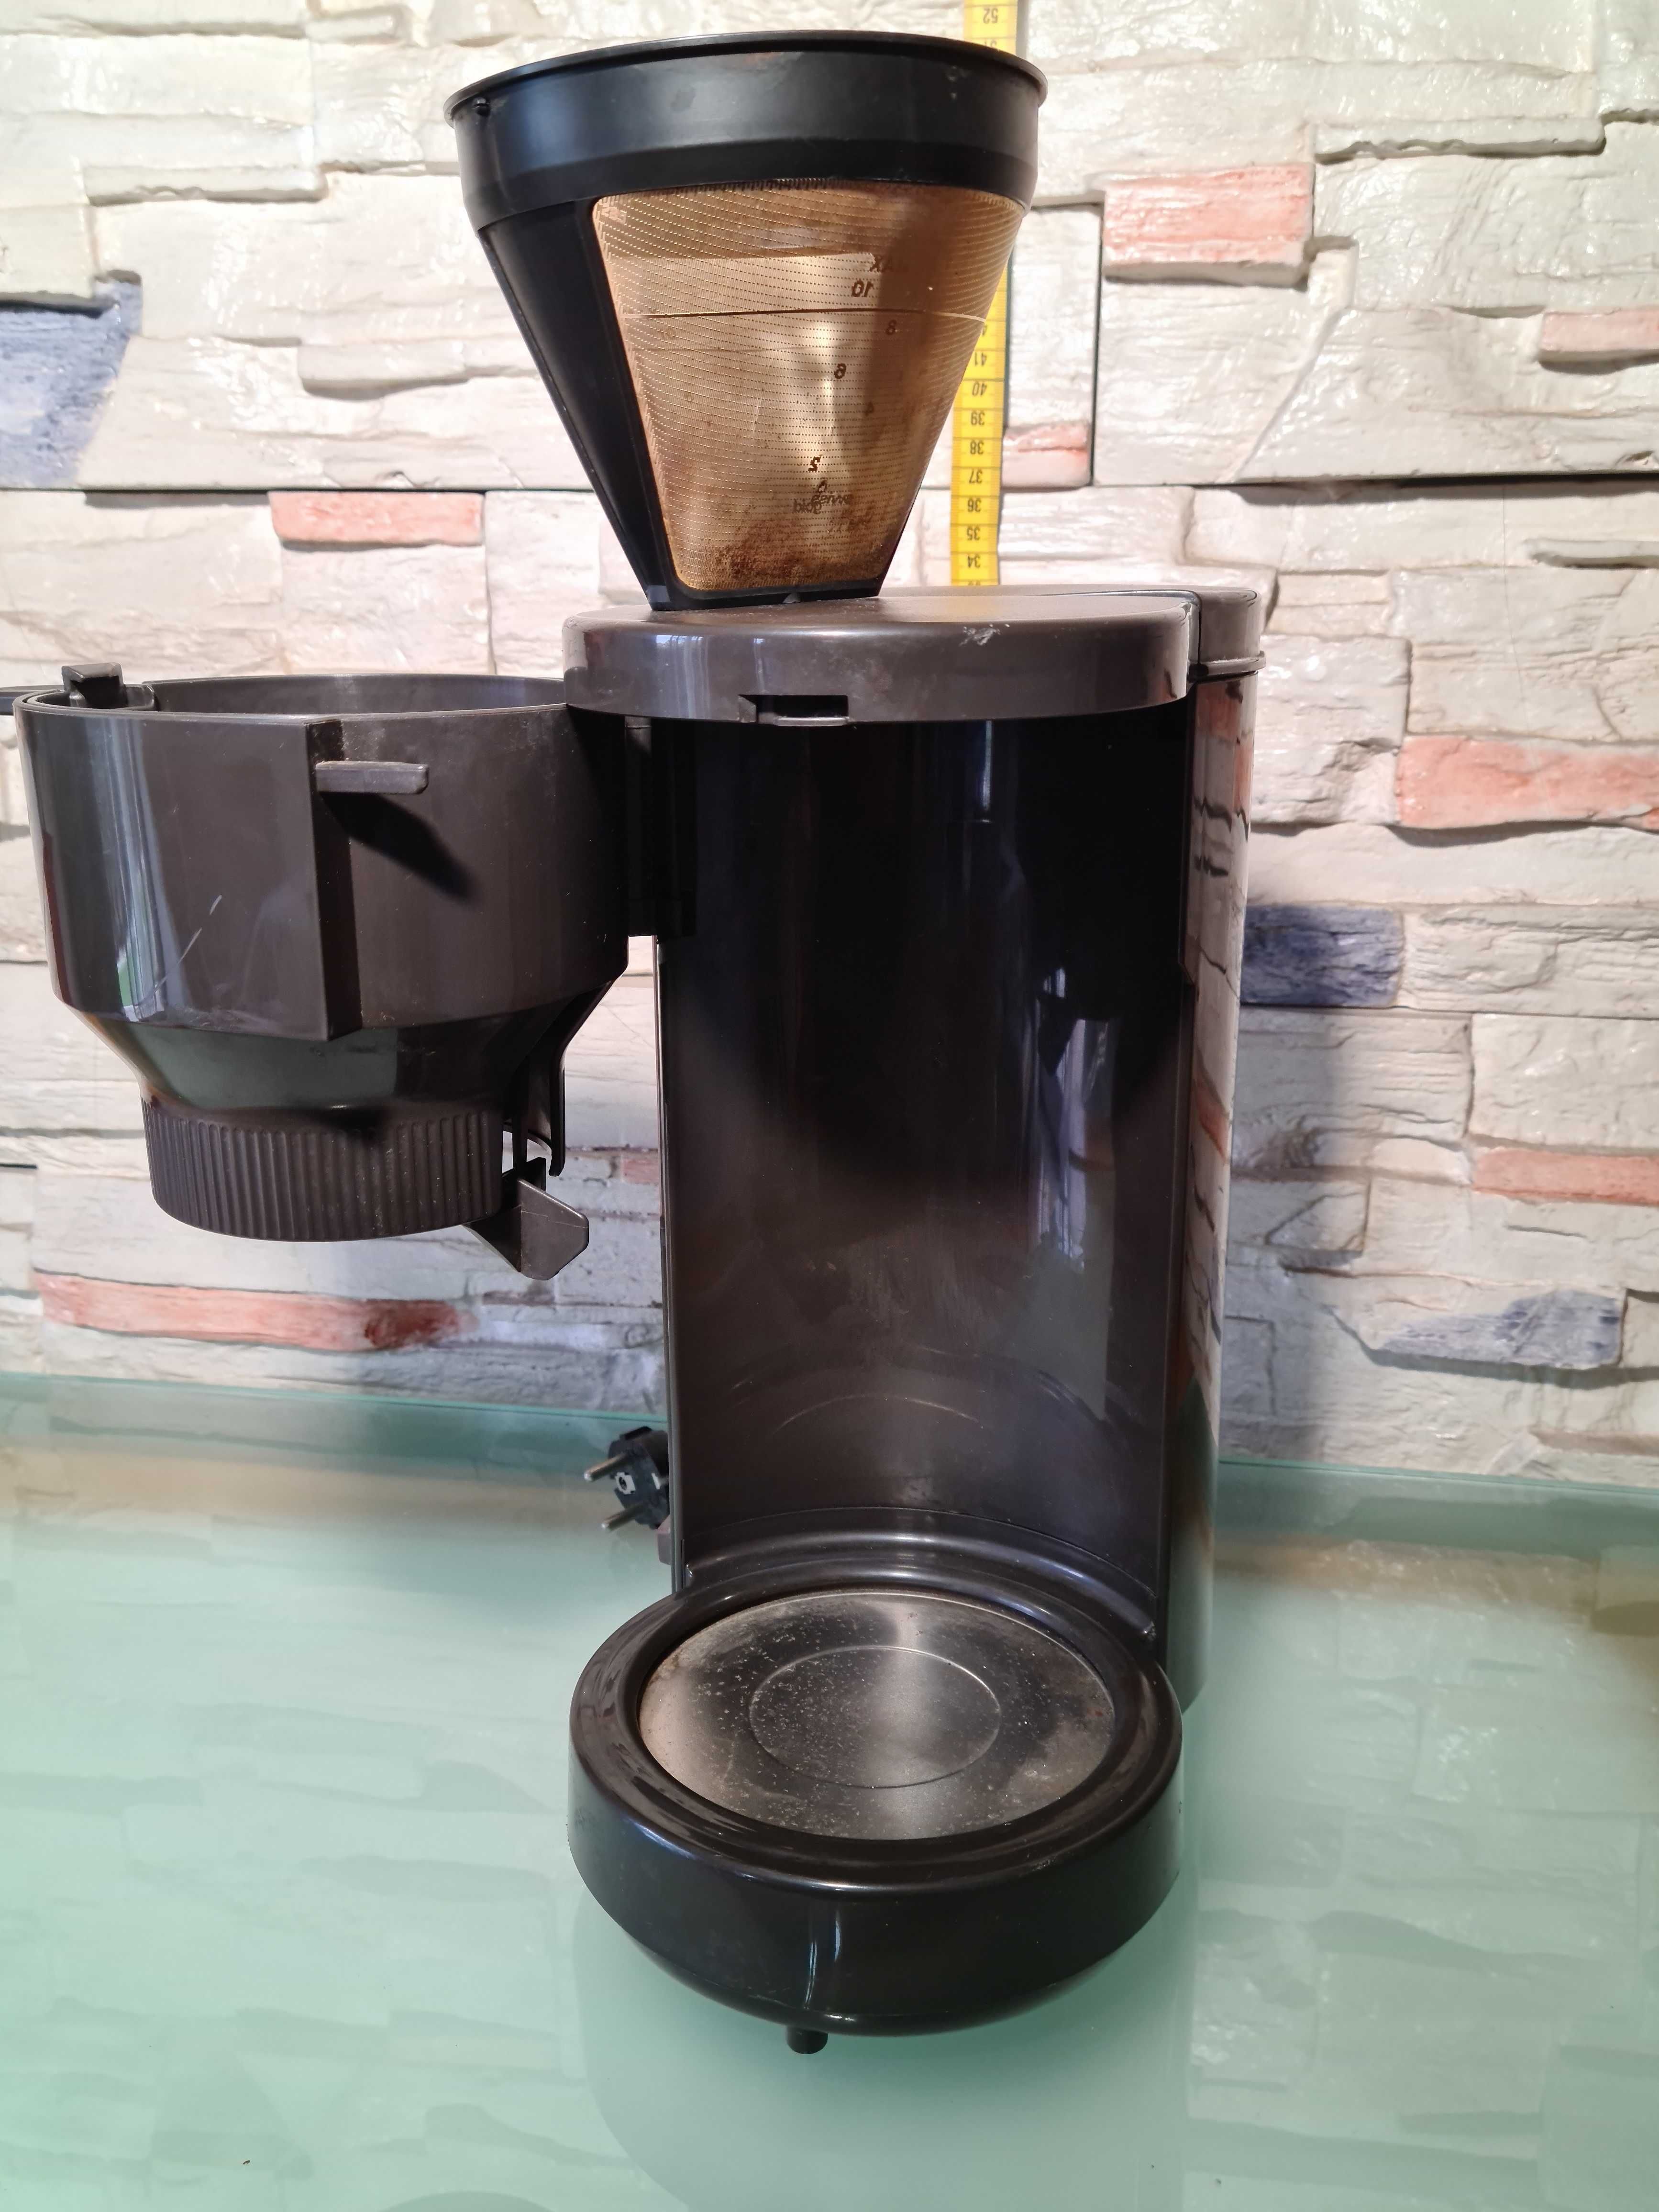 Maquina de café com filtro